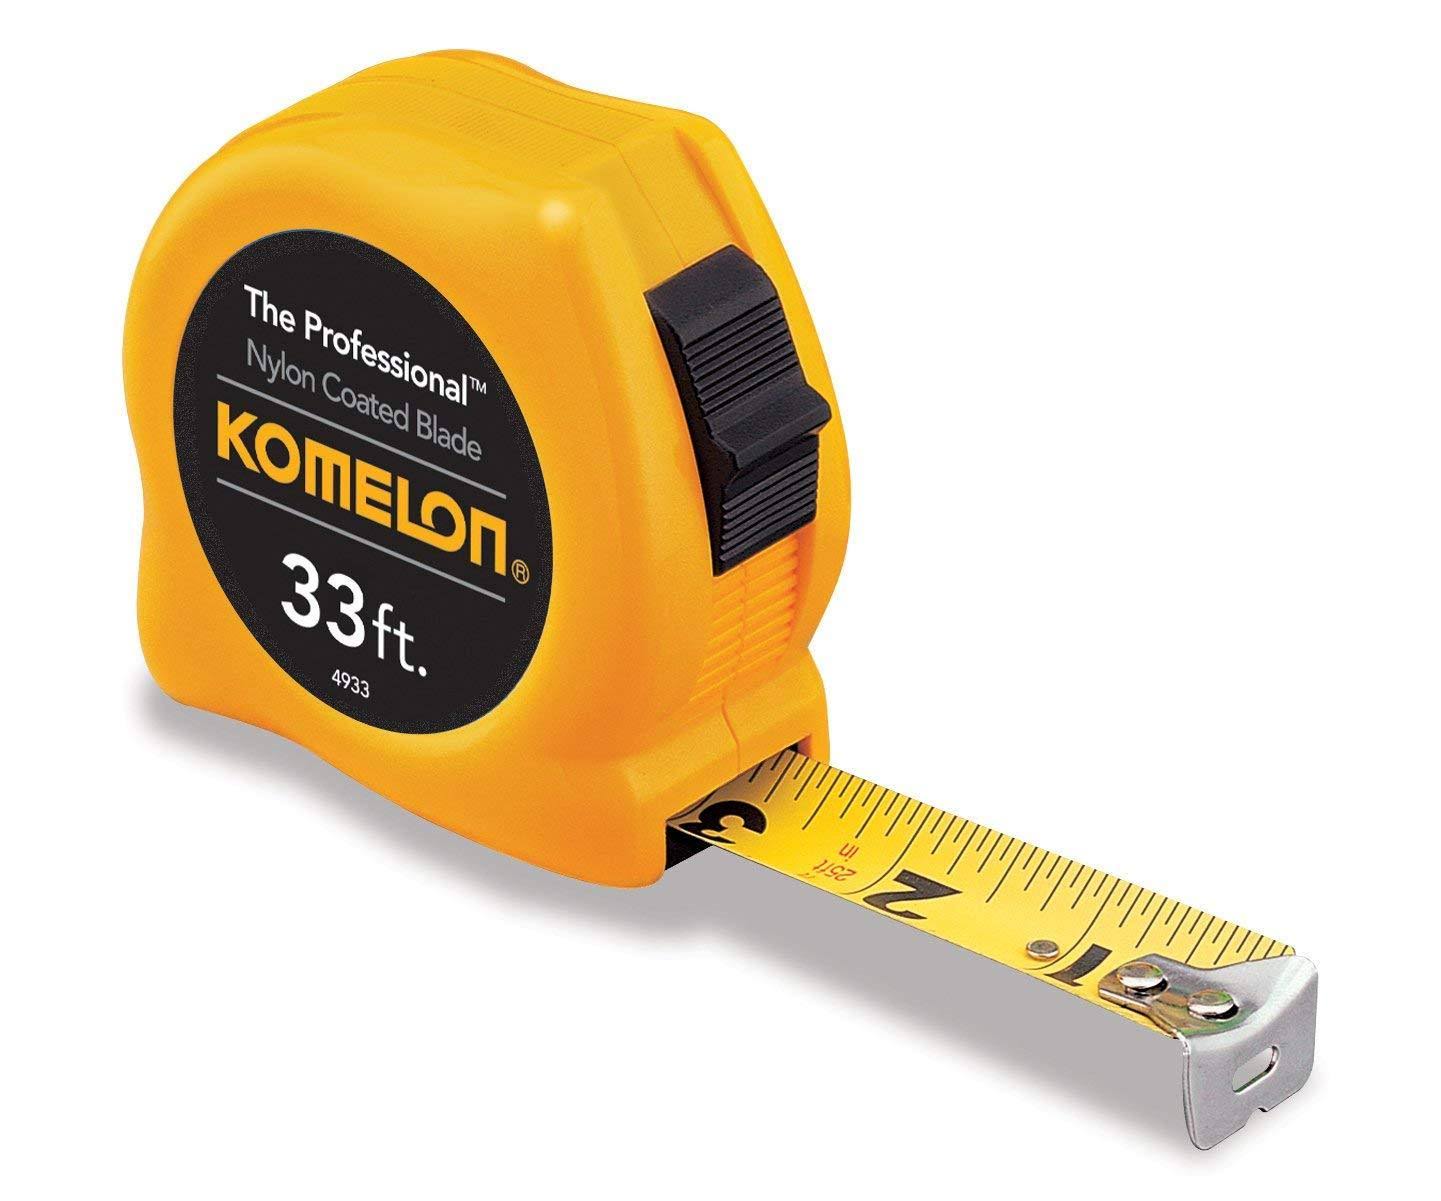 Komelon 4933 the Professional Nylon Coated Steel Blade Tape Measure - 33' x 1", Yellow Case